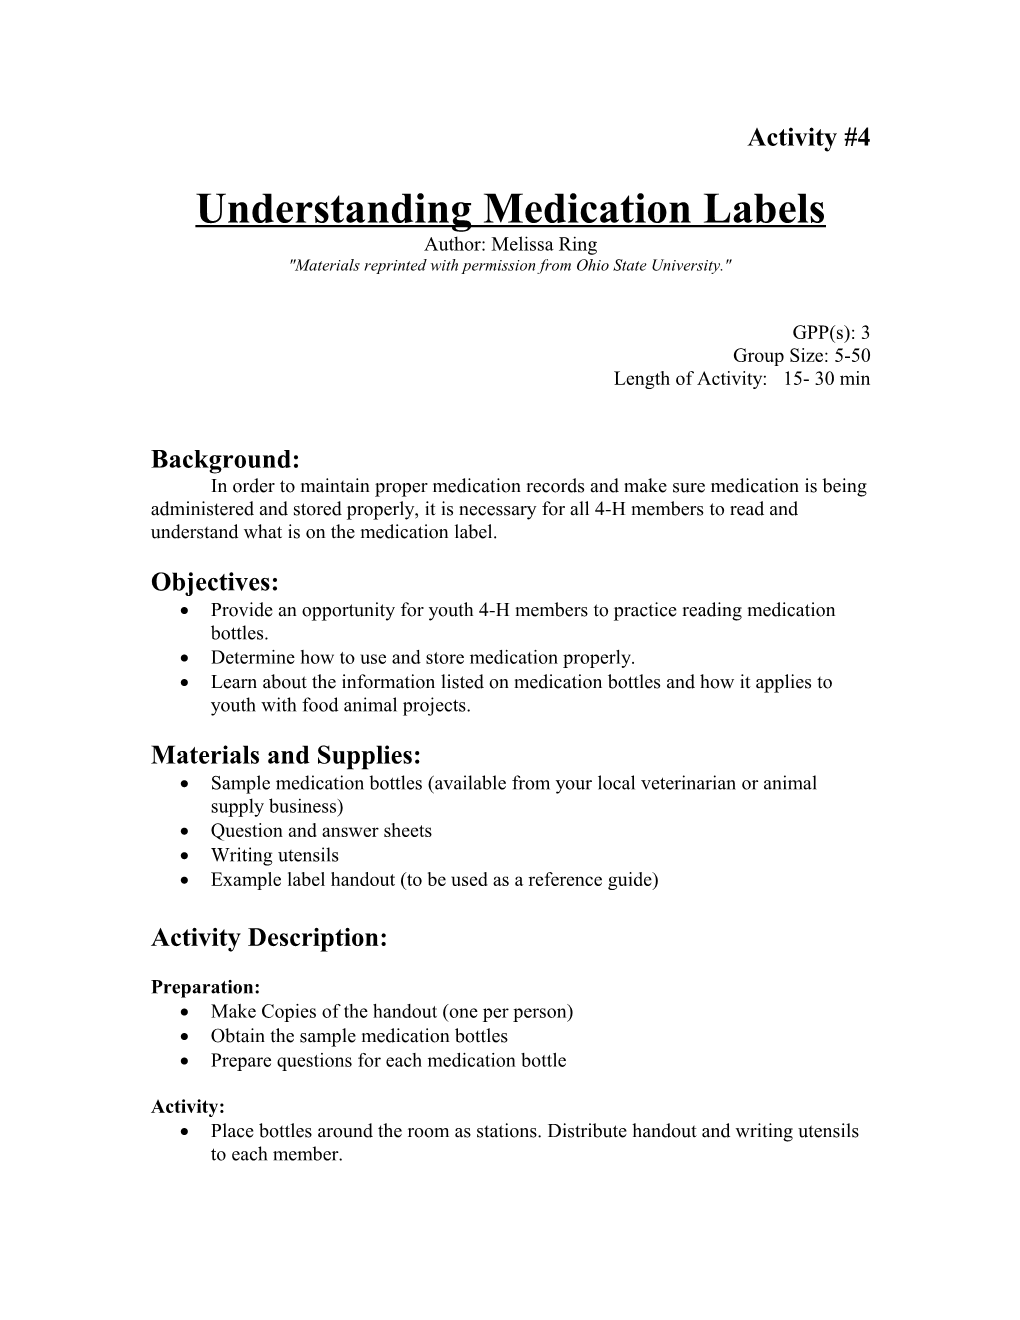 Understanding Medication Labels